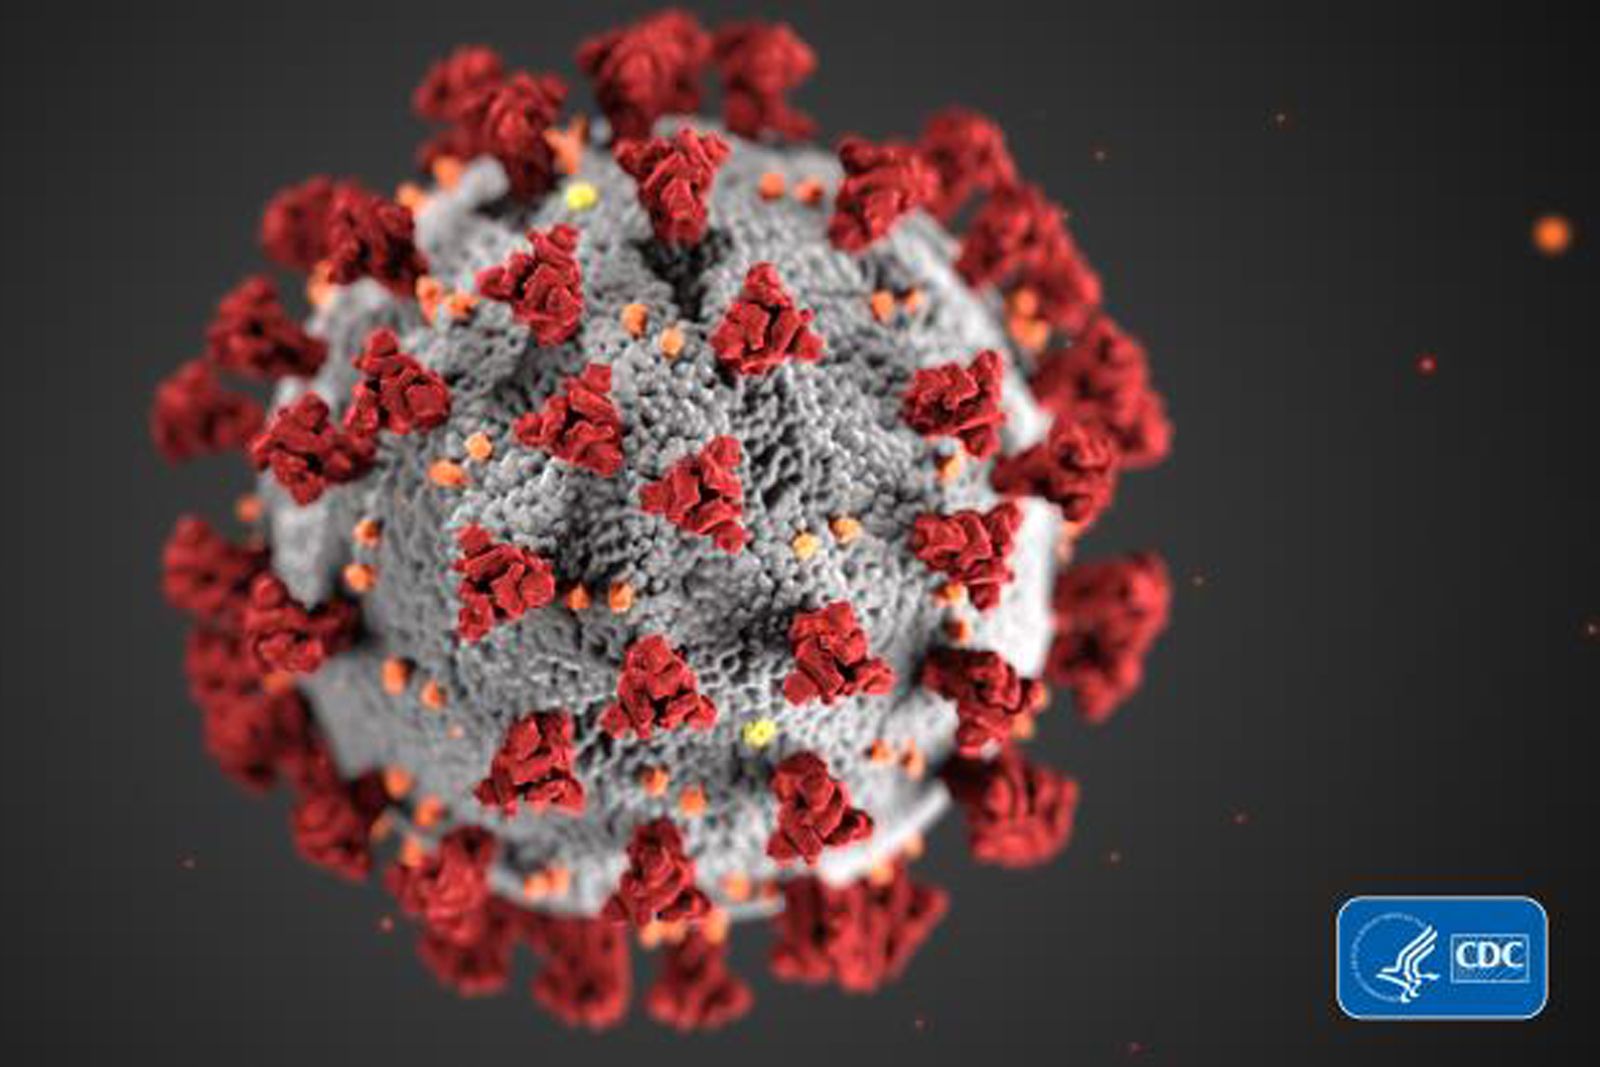 You can help coronavirus research with foldinghome image 1